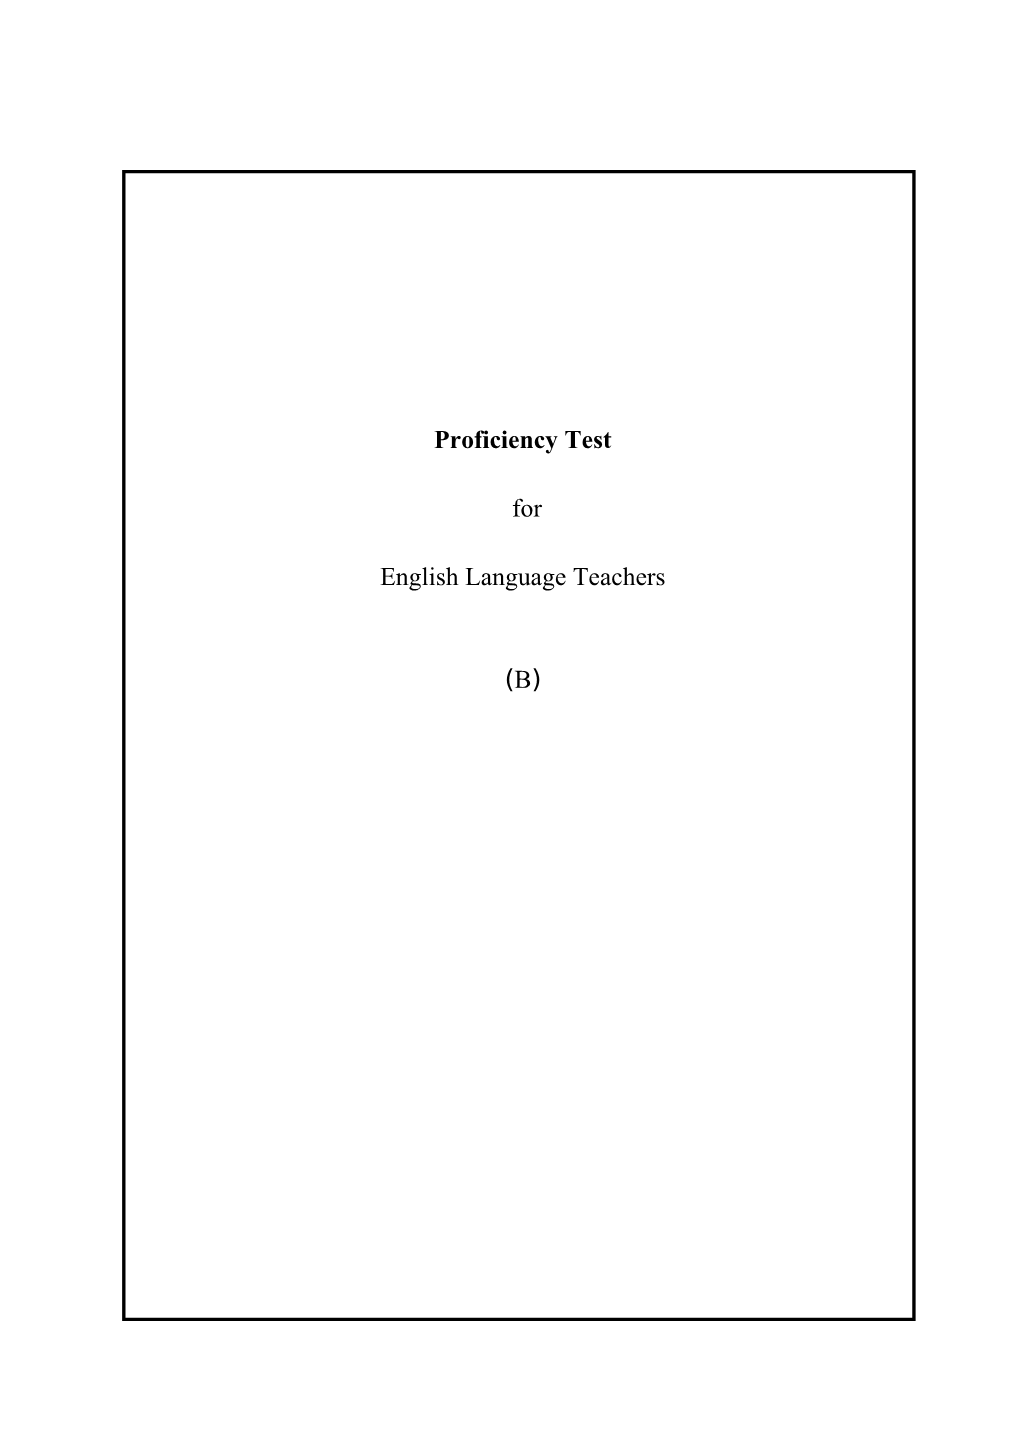 Proficiency Test for English Language Teachers (B)